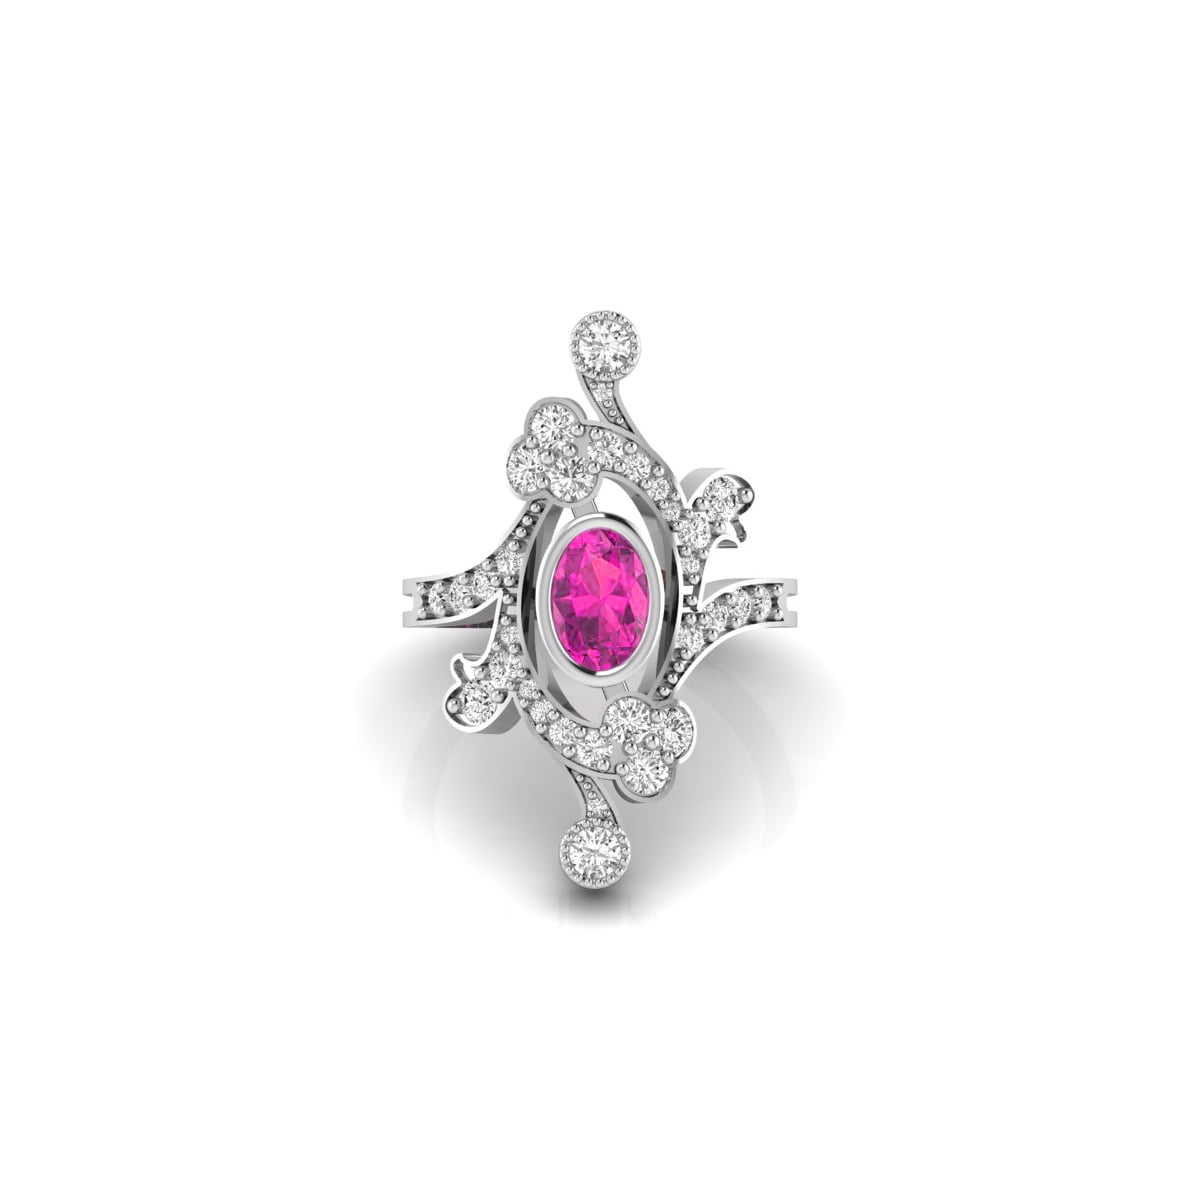 Antique Pink Vintage-Style Nouveau Ring For Women